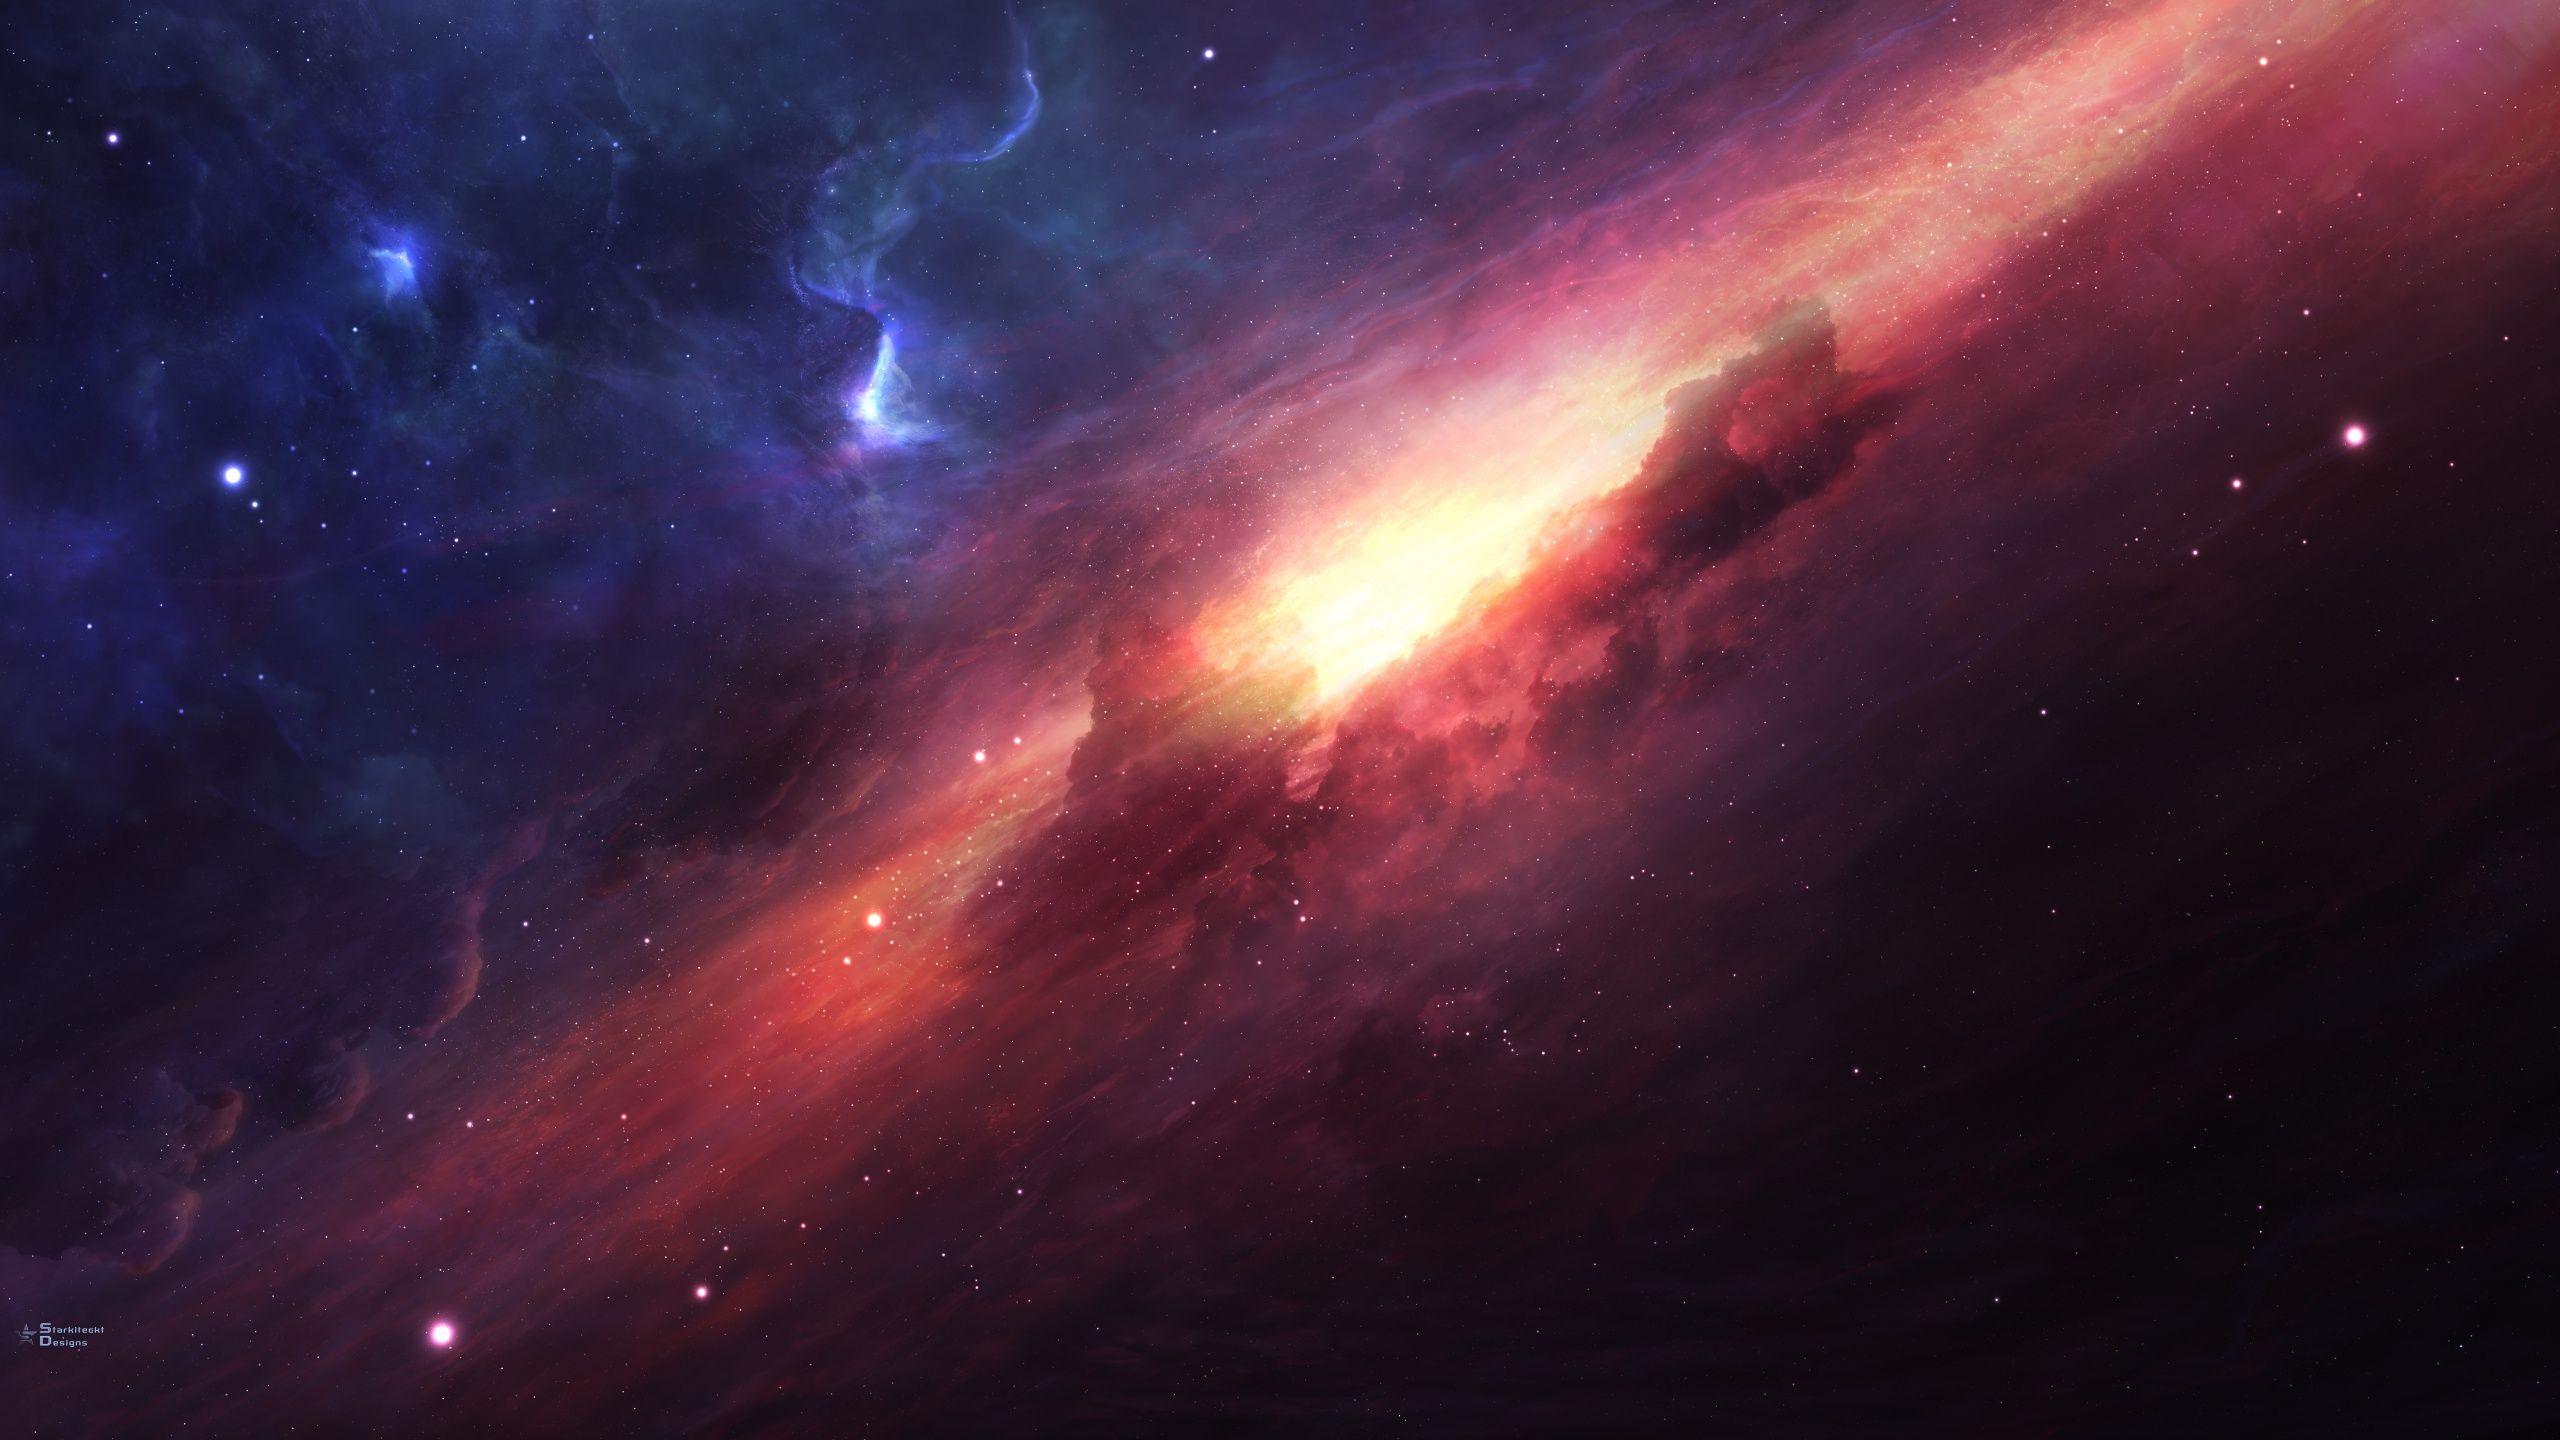 Digital Space Universe 4K 8K Wallpaper in jpg format for free